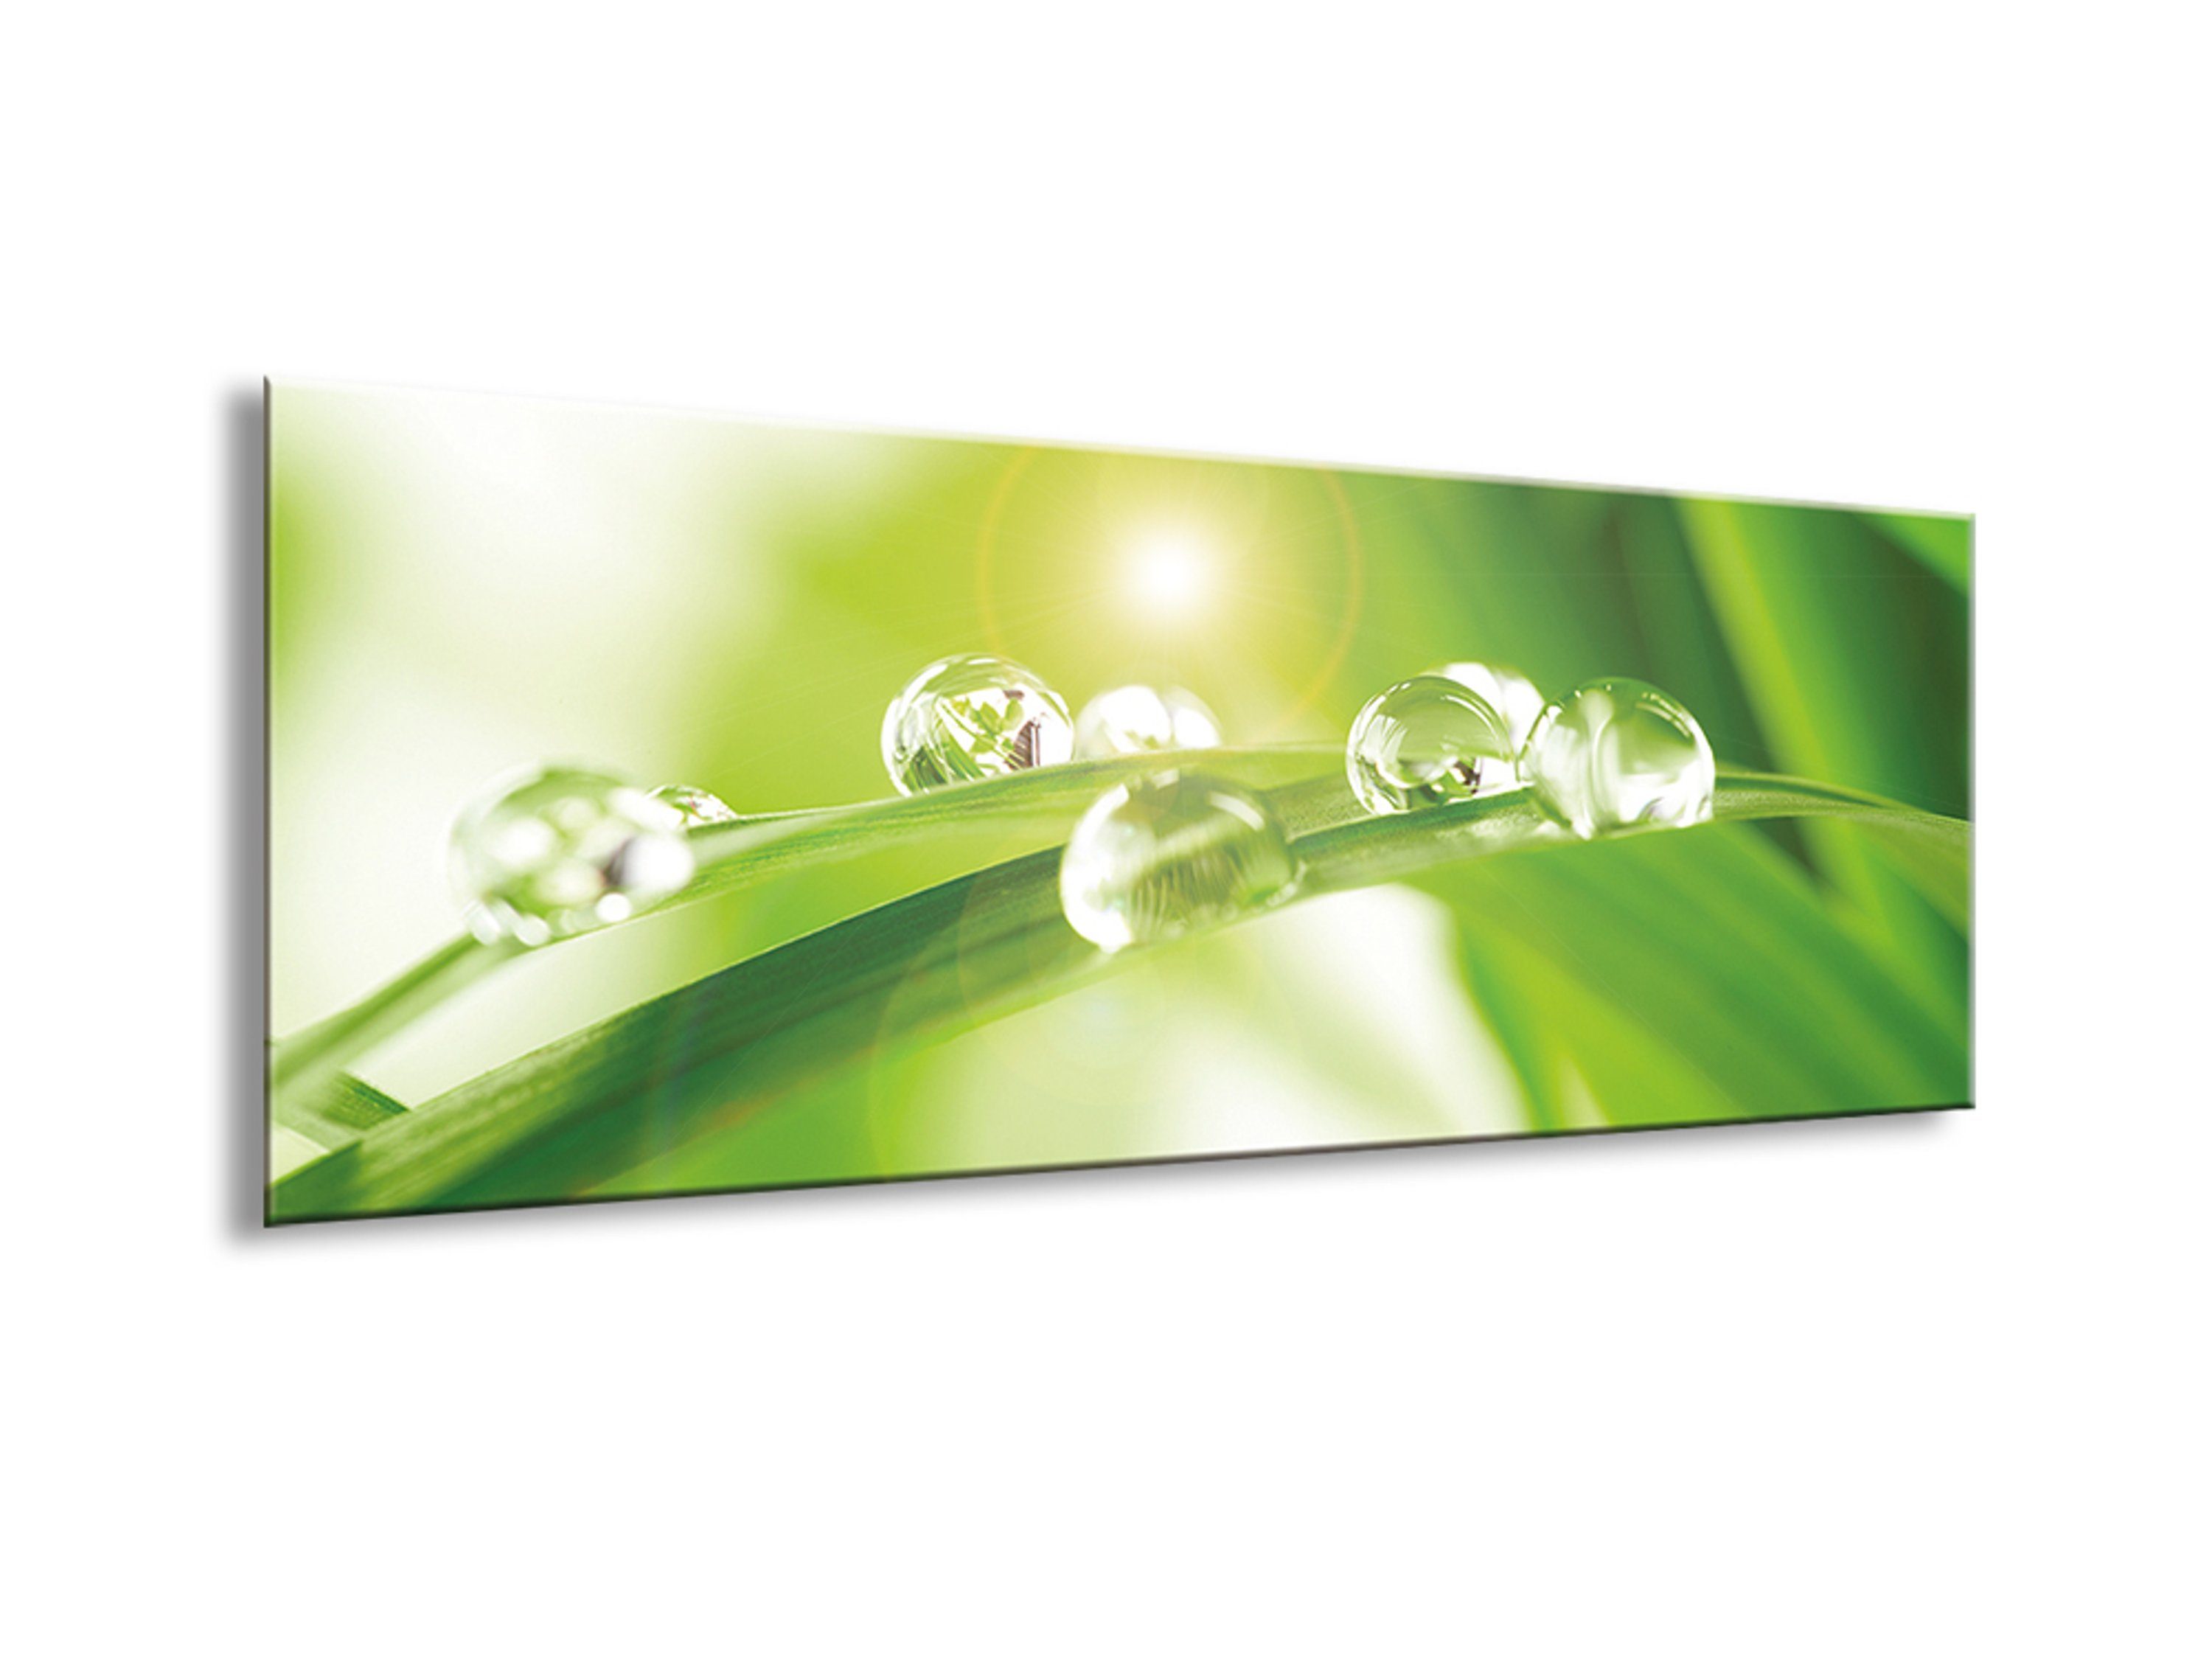 artissimo Glasbild Glasbild 80x30cm Bild Blatt Wellness Natur: Wassertropfen Glas mit Blatt Spa aus grün